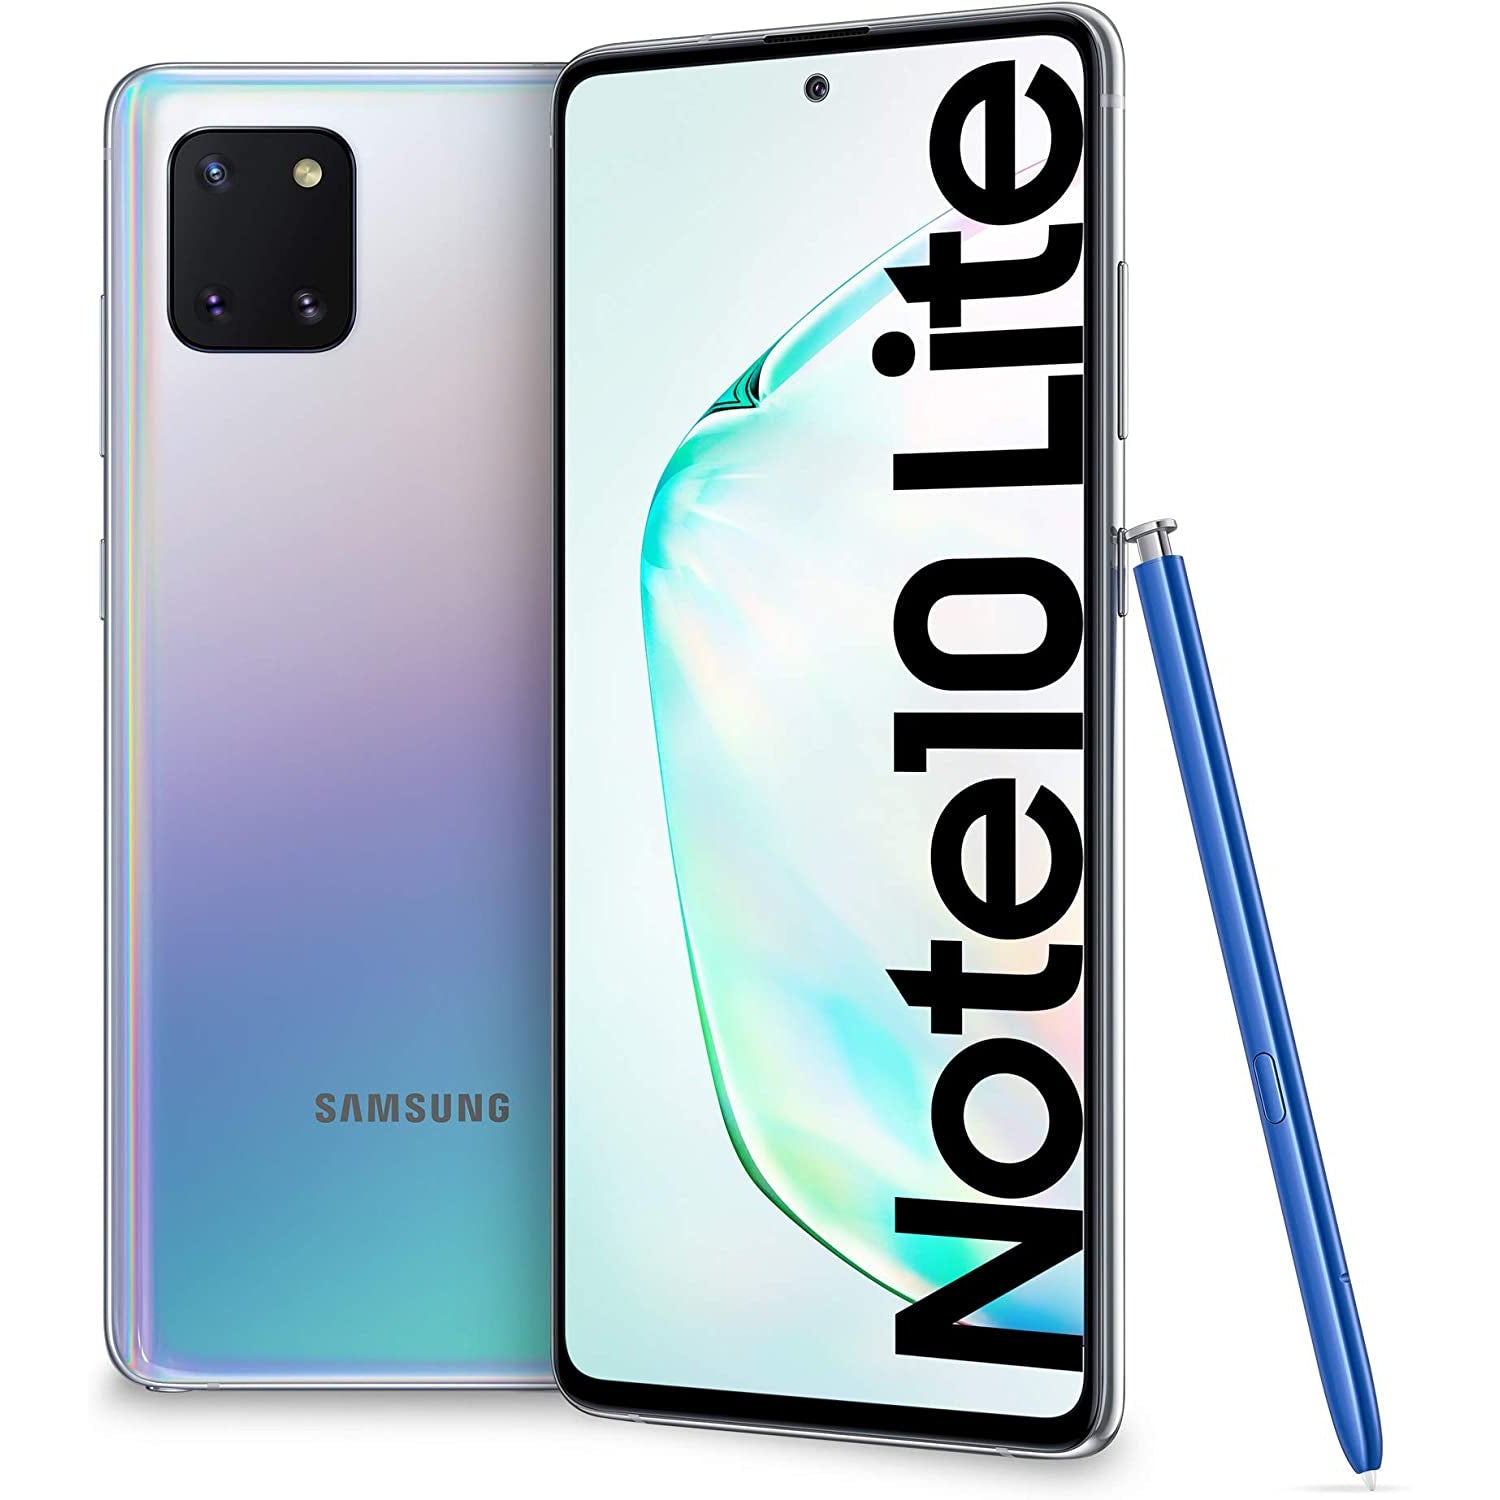 Samsung Galaxy Note 10 Lite Smartphone with S Pen, 6.7", SIM Free, 128GB, Silver